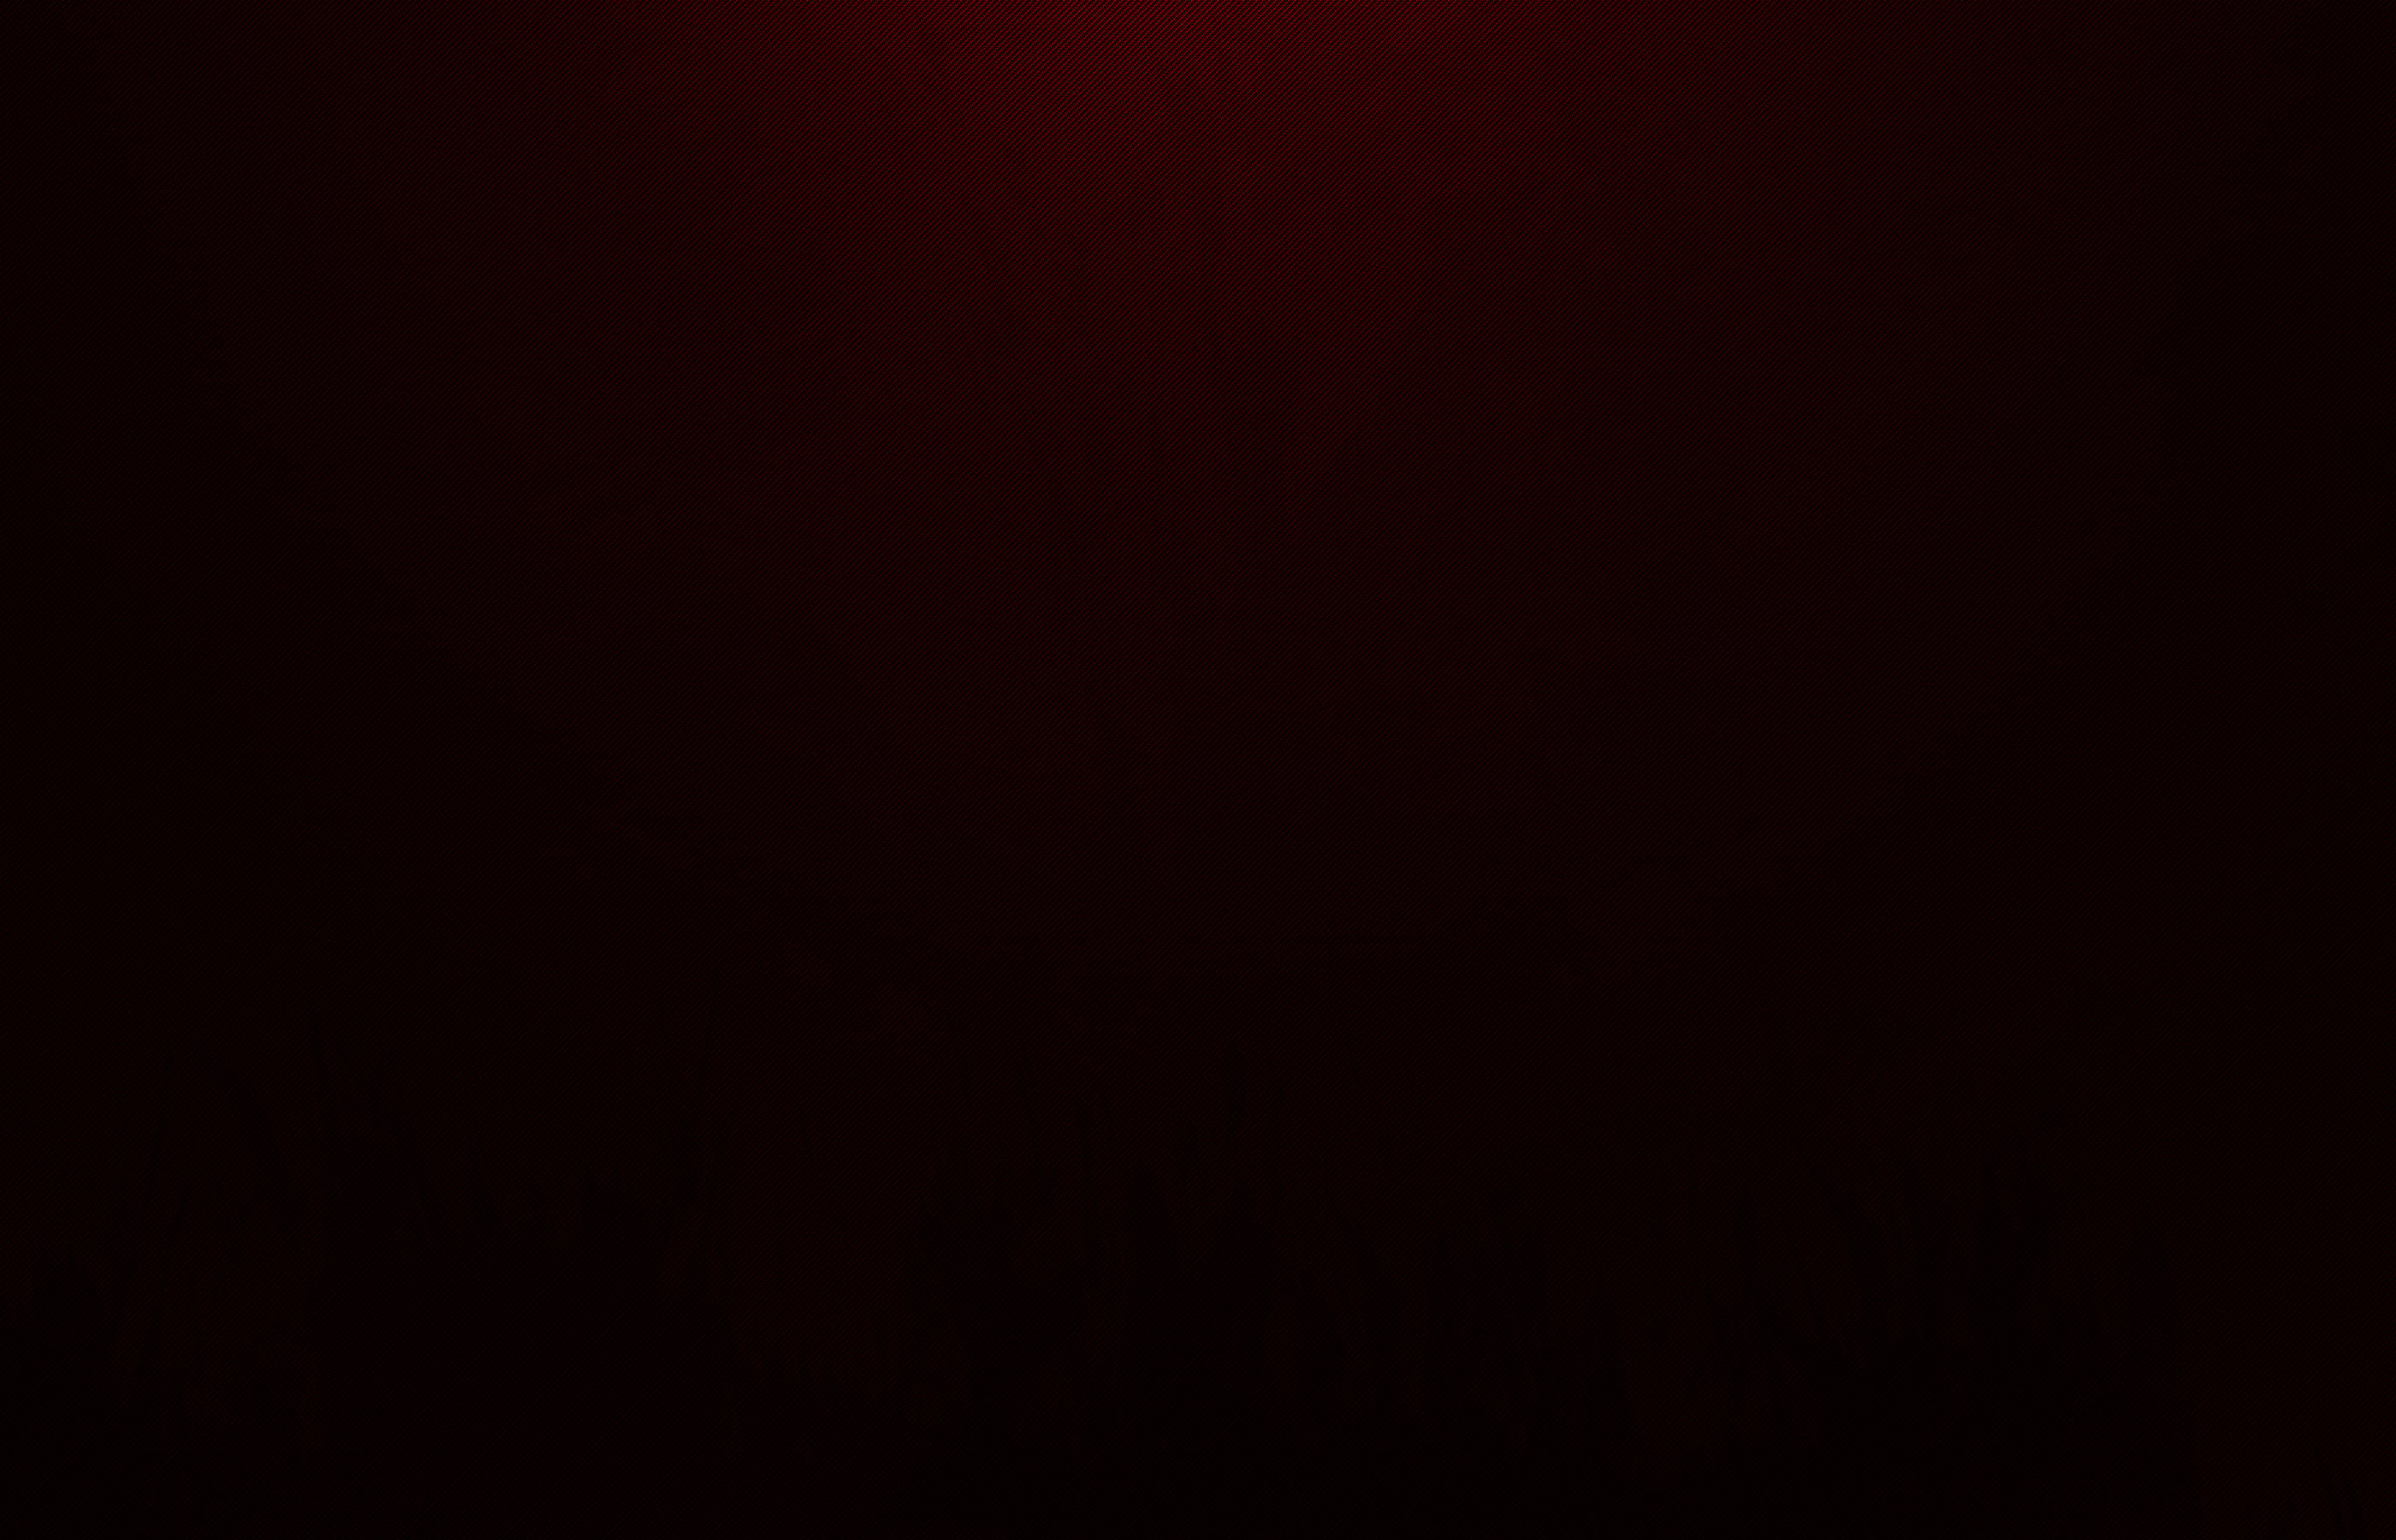 Dark Red Background - WallpaperSafari